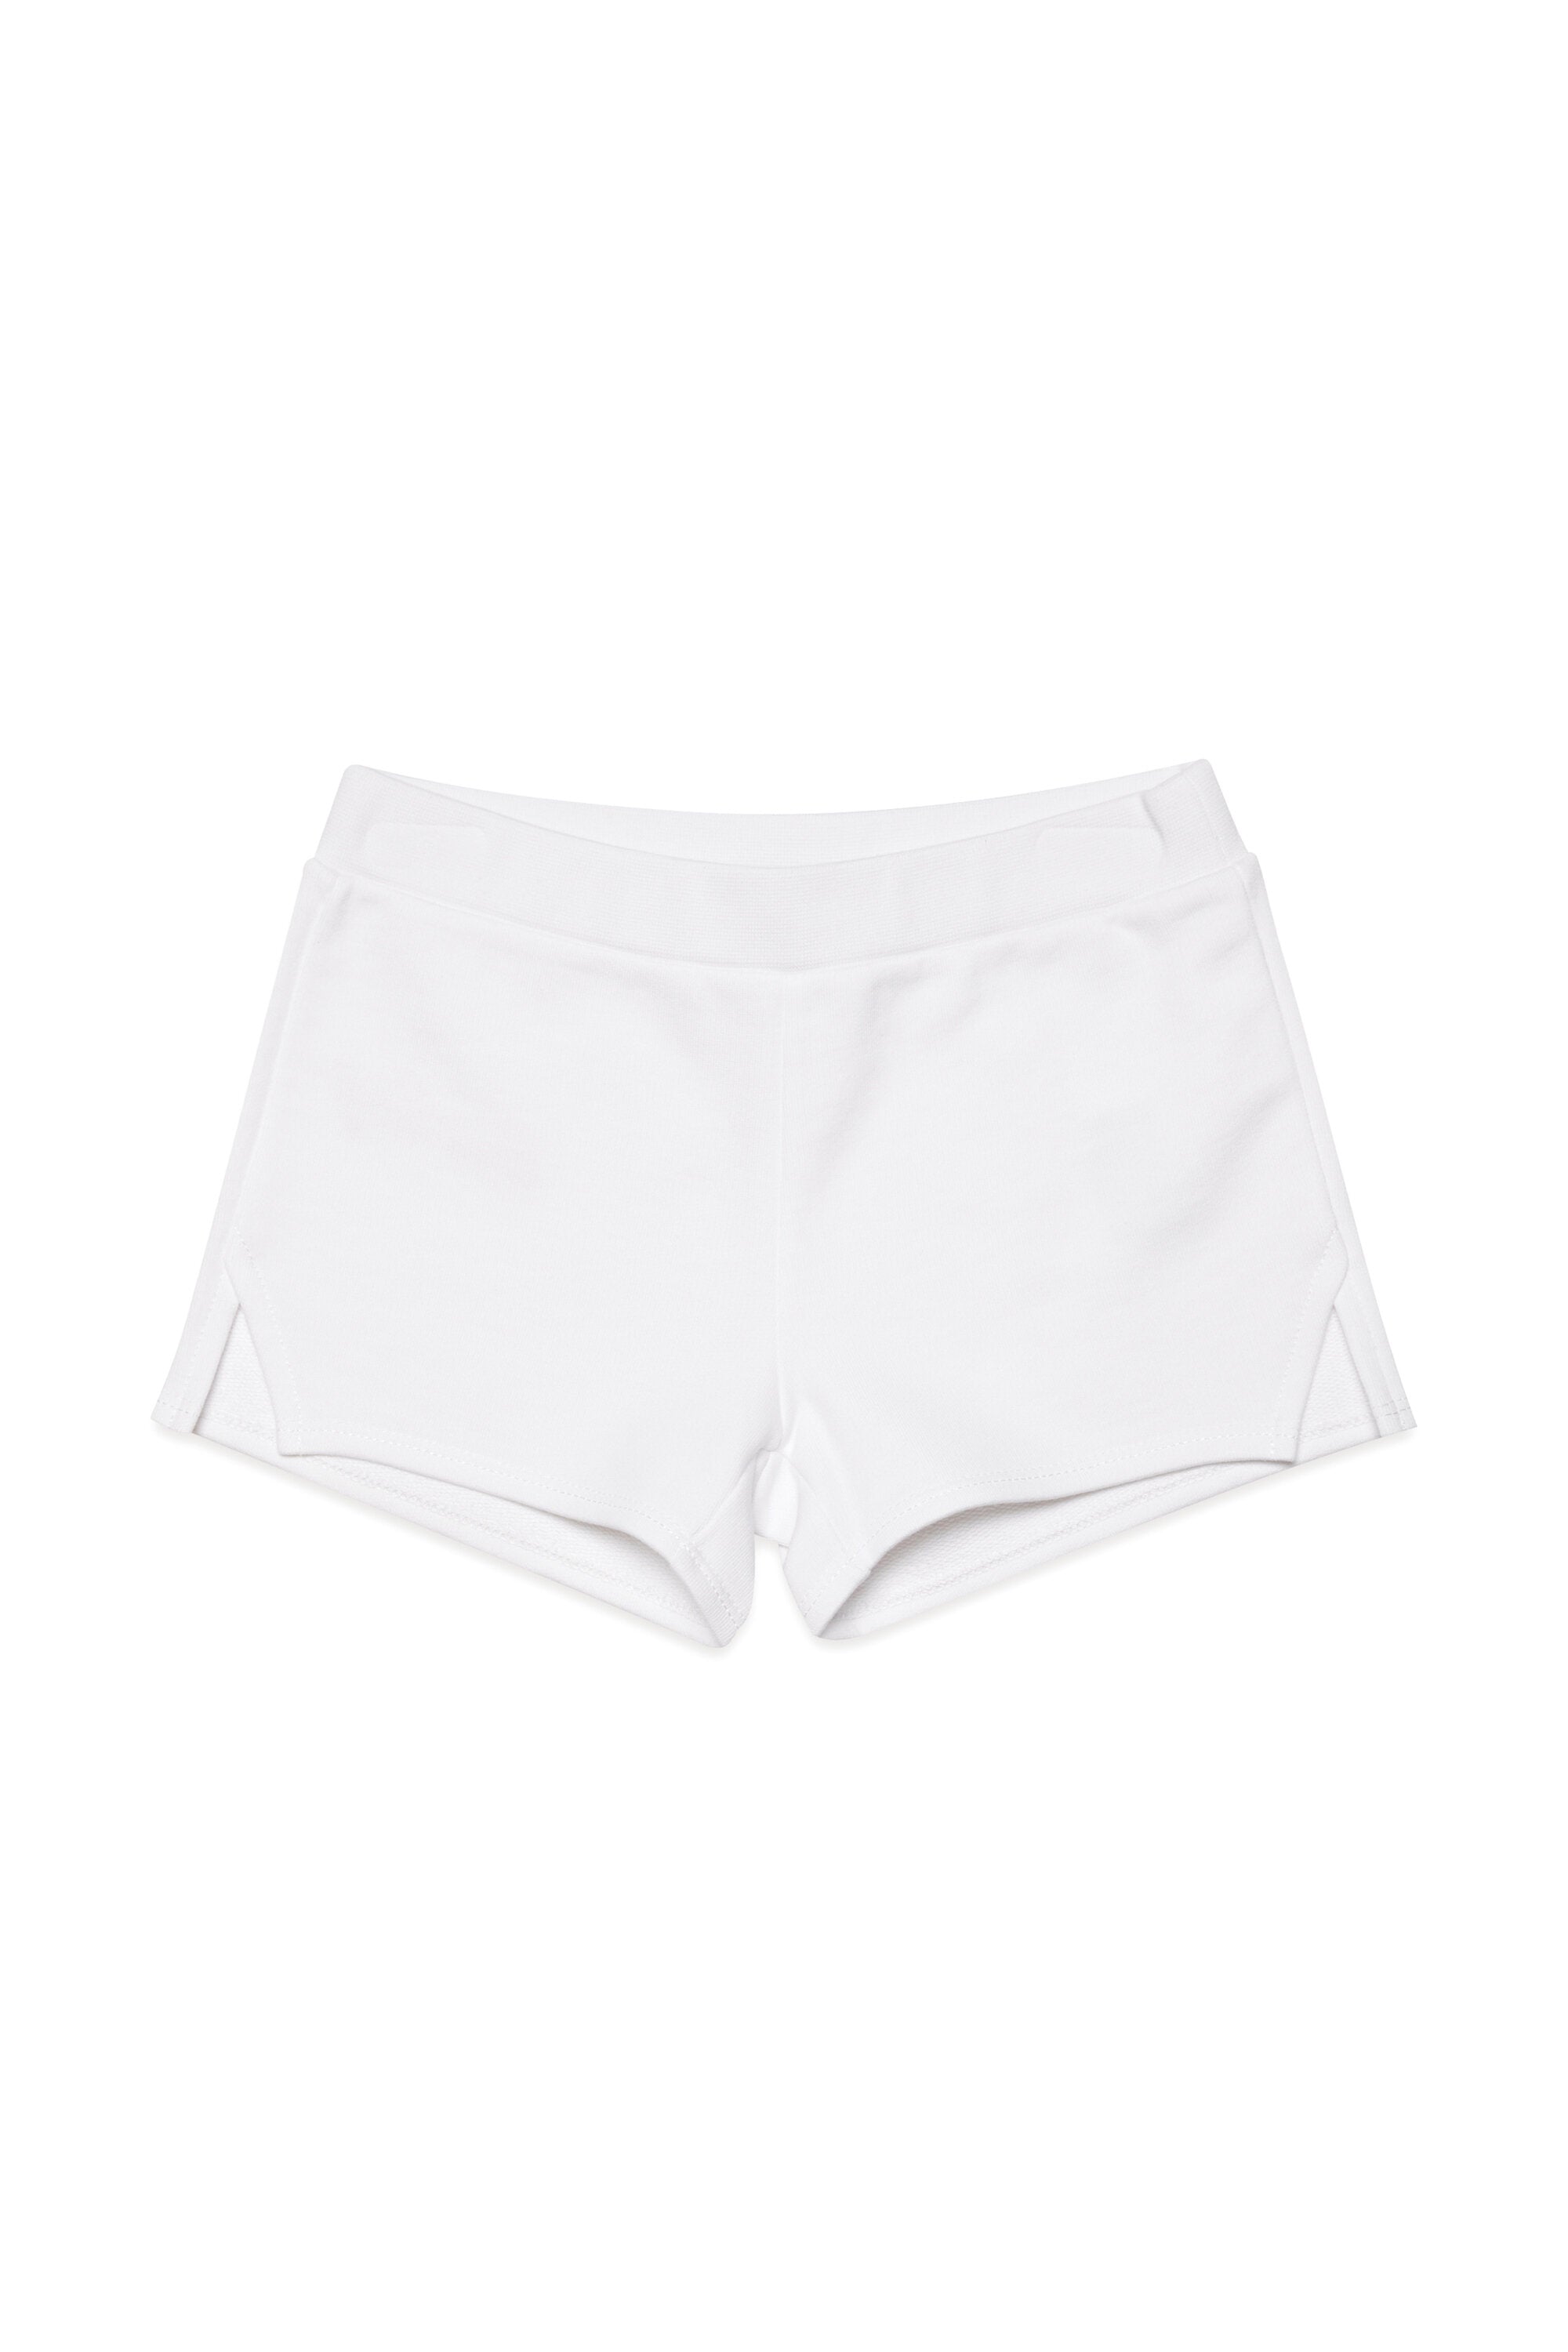 Icon Darling fleece shorts